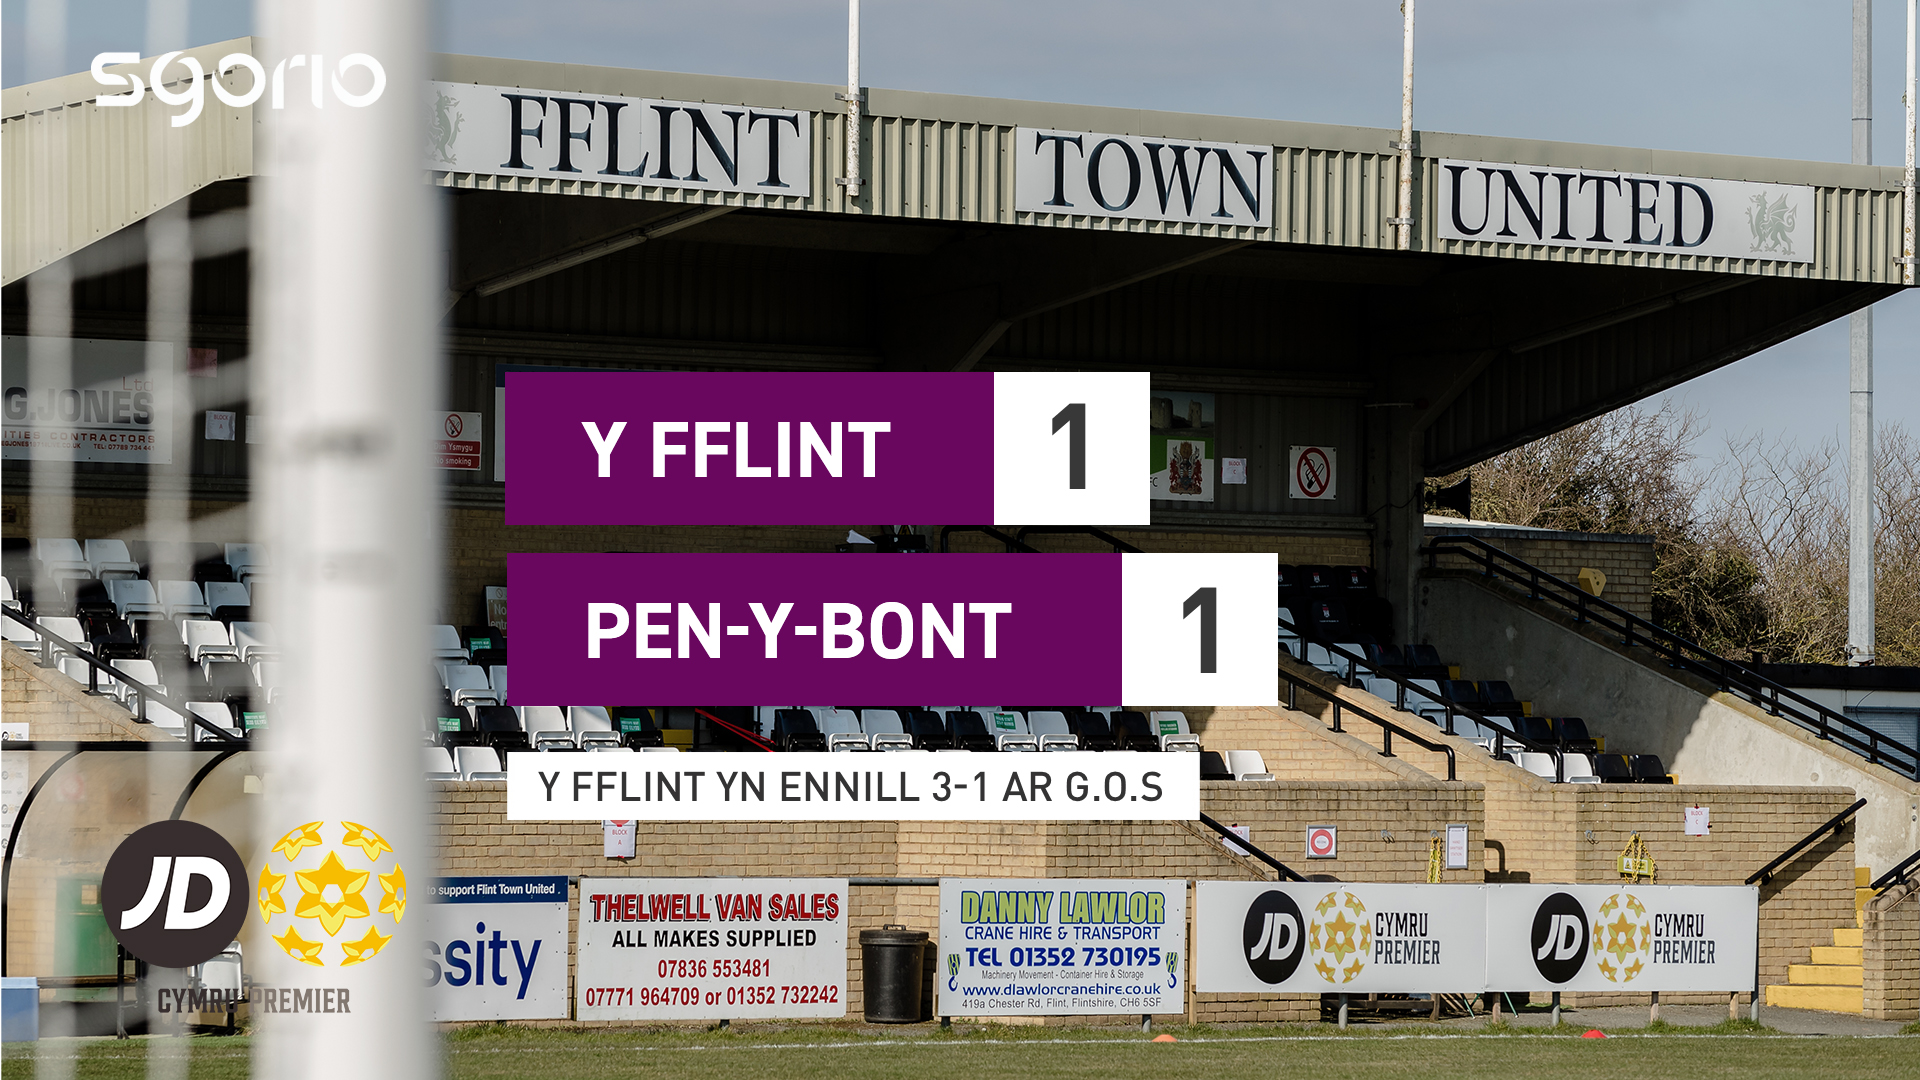 Flint Town United 1-1 Pen-y-bont